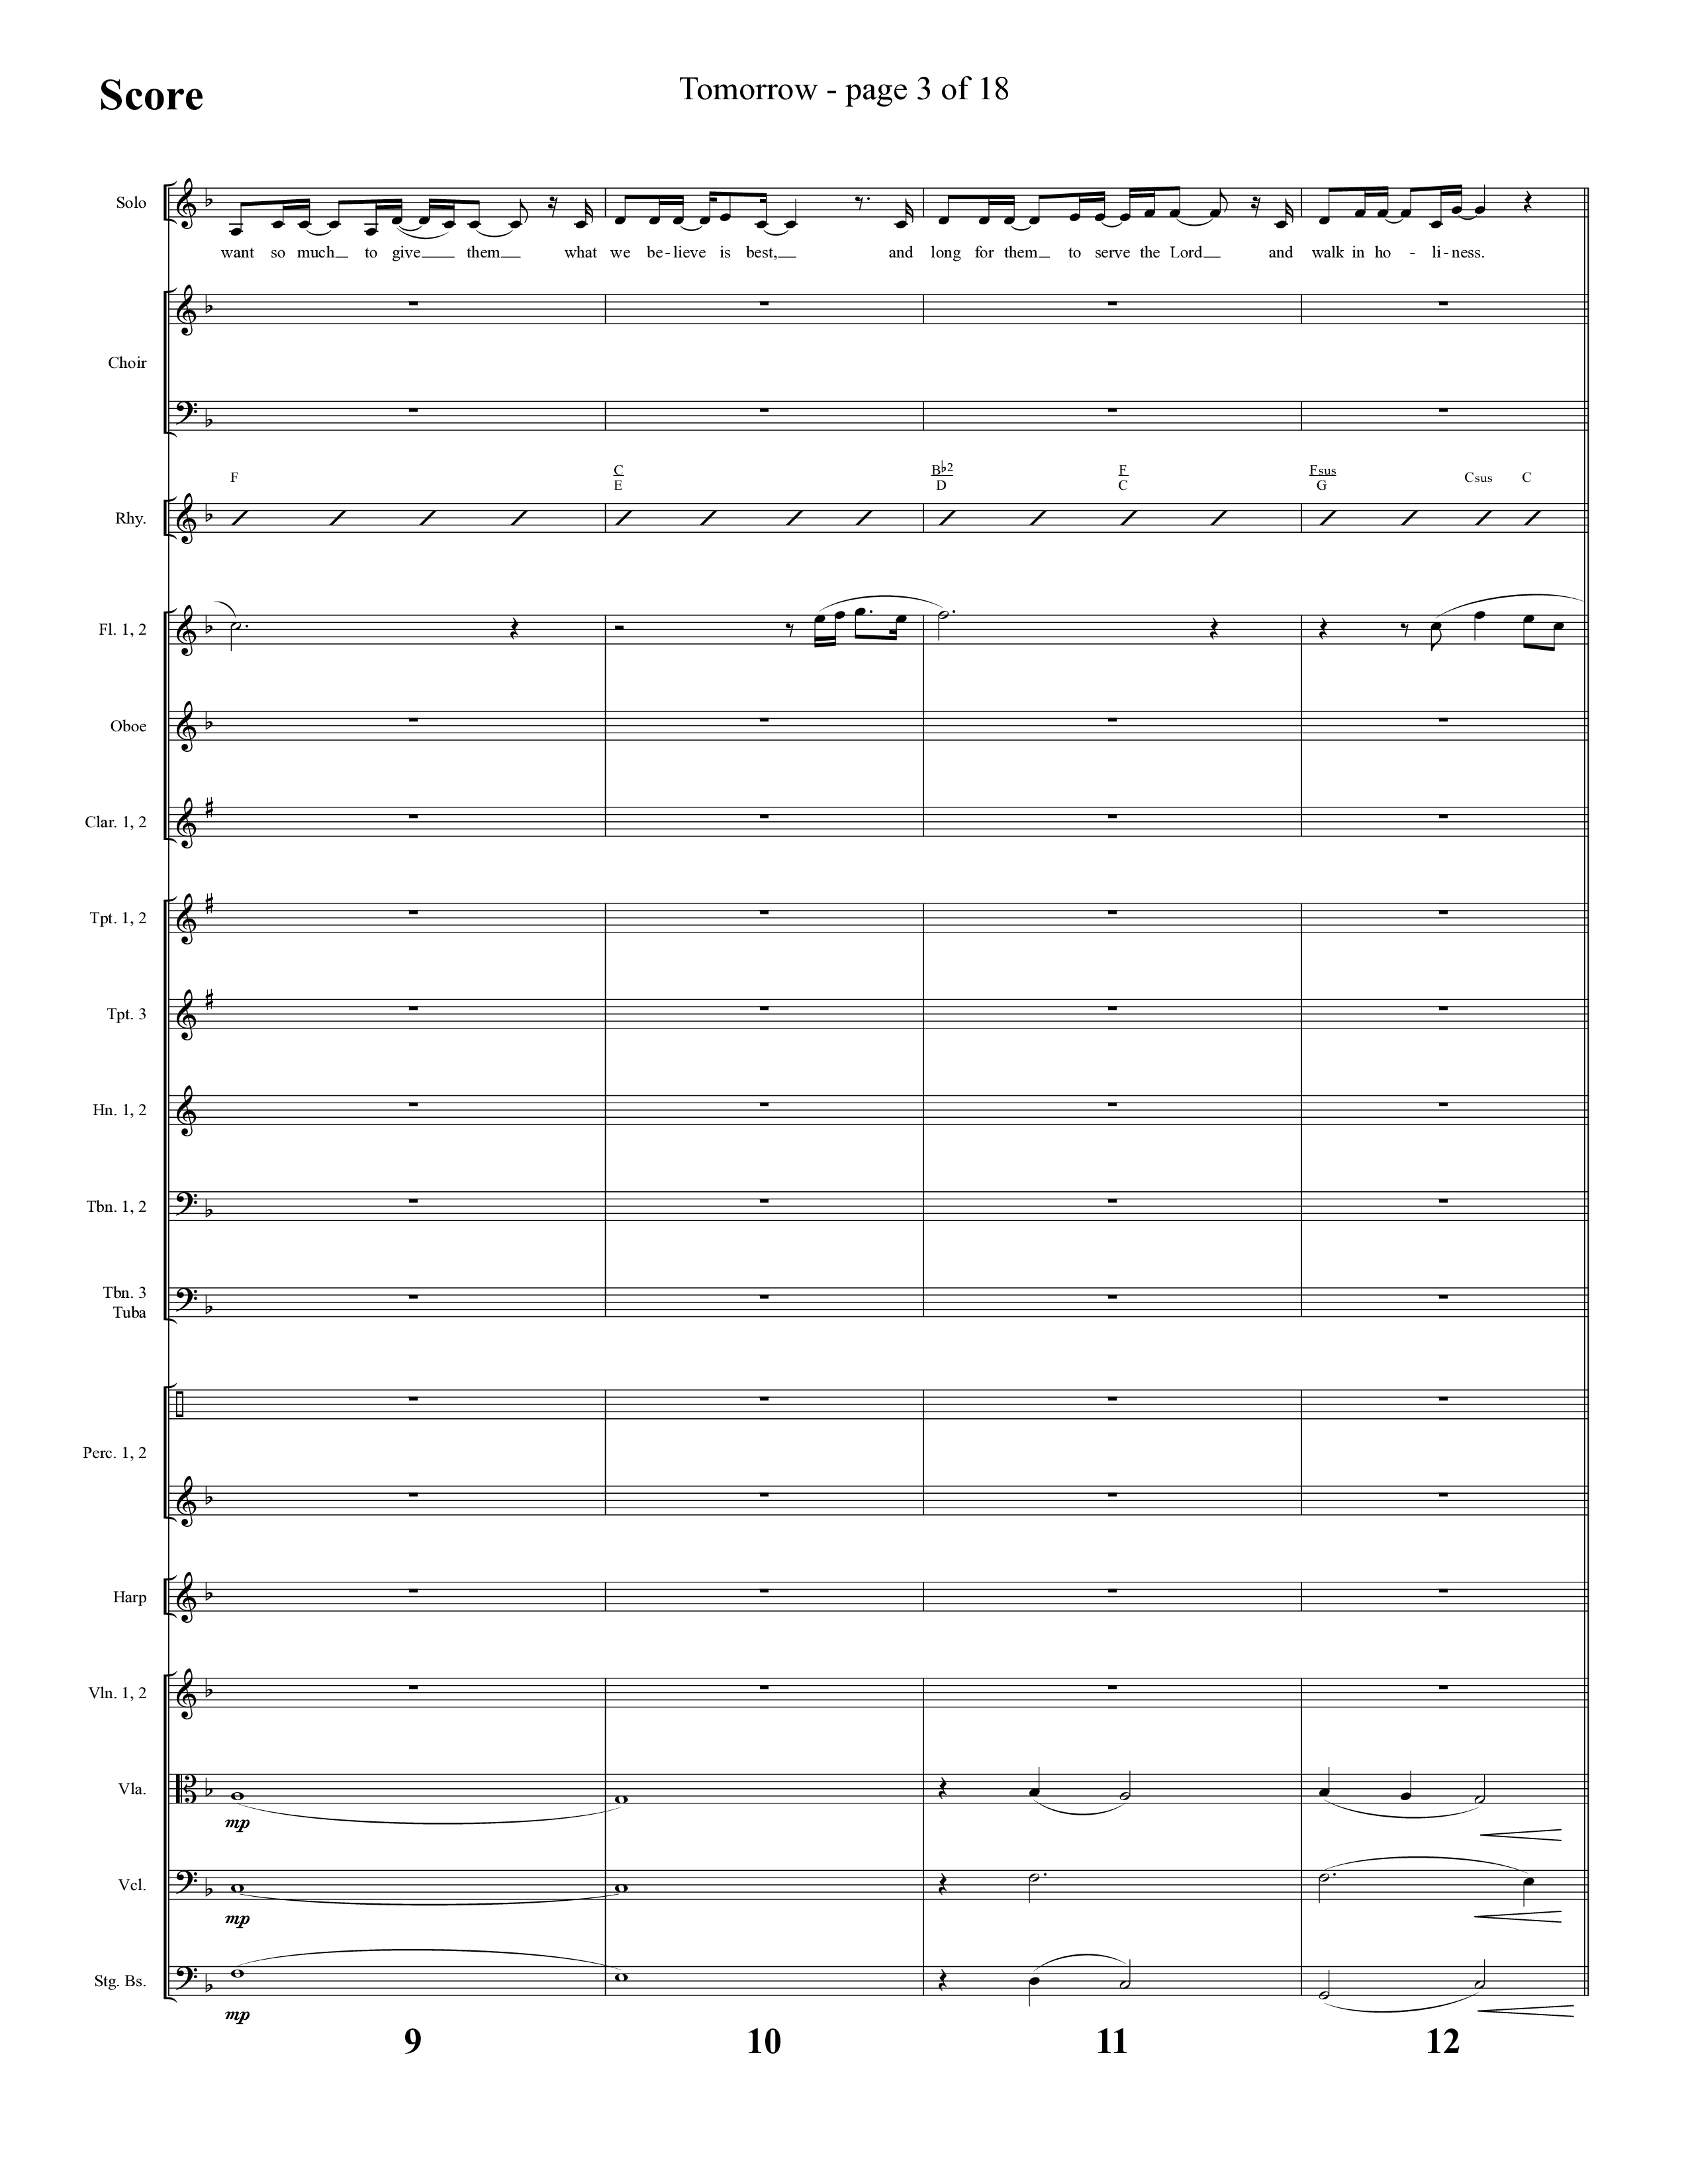 Tomorrow (Choral Anthem SATB) Conductor's Score (Lifeway Choral / Arr. Cliff Duren)